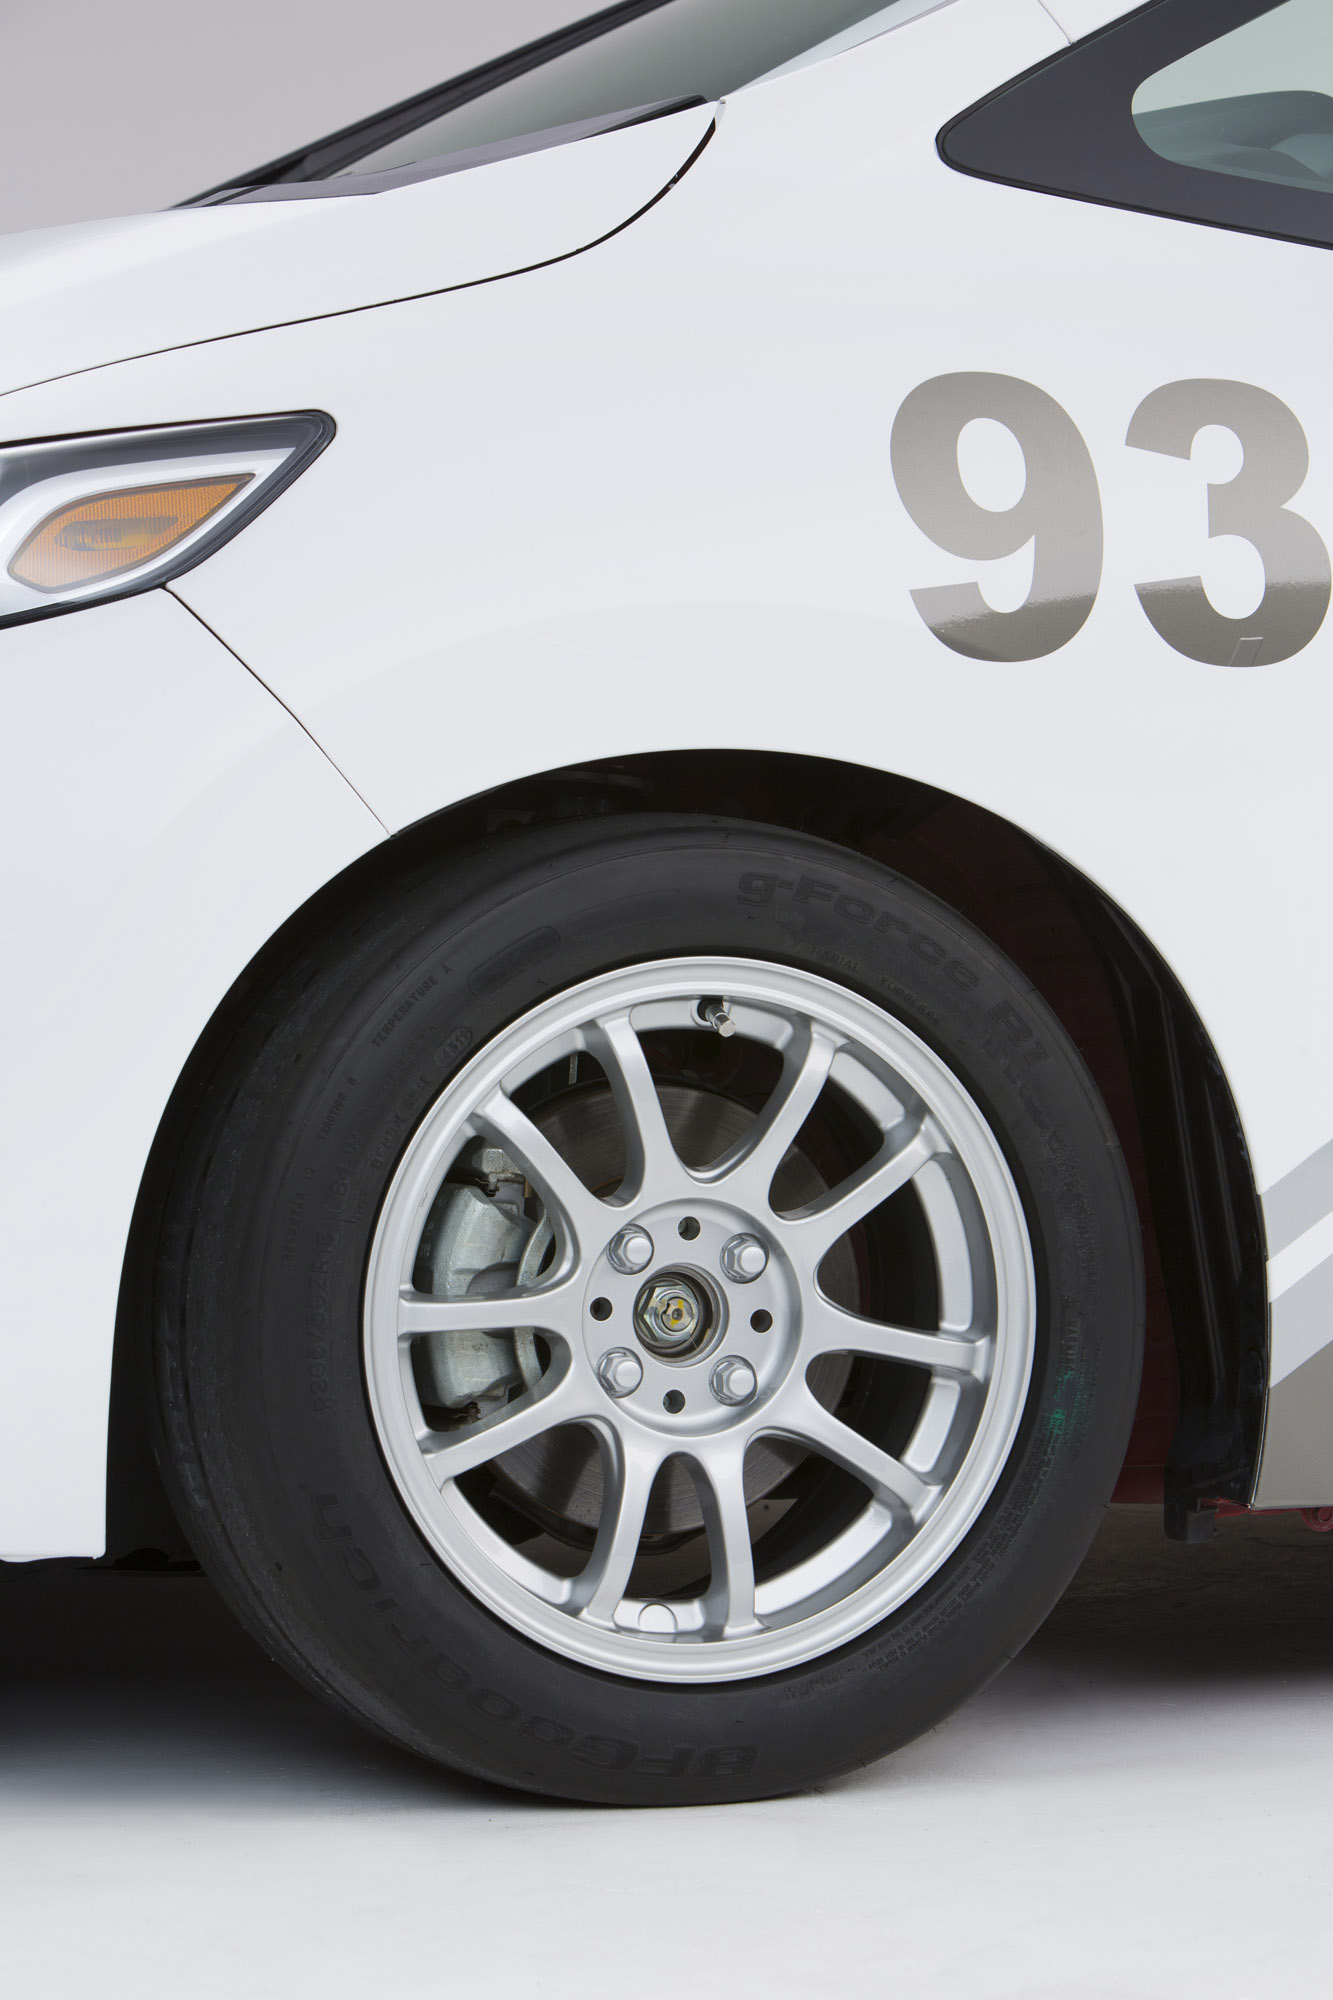 Honda Fit HPD B-Spec Concept Race Car photo #3